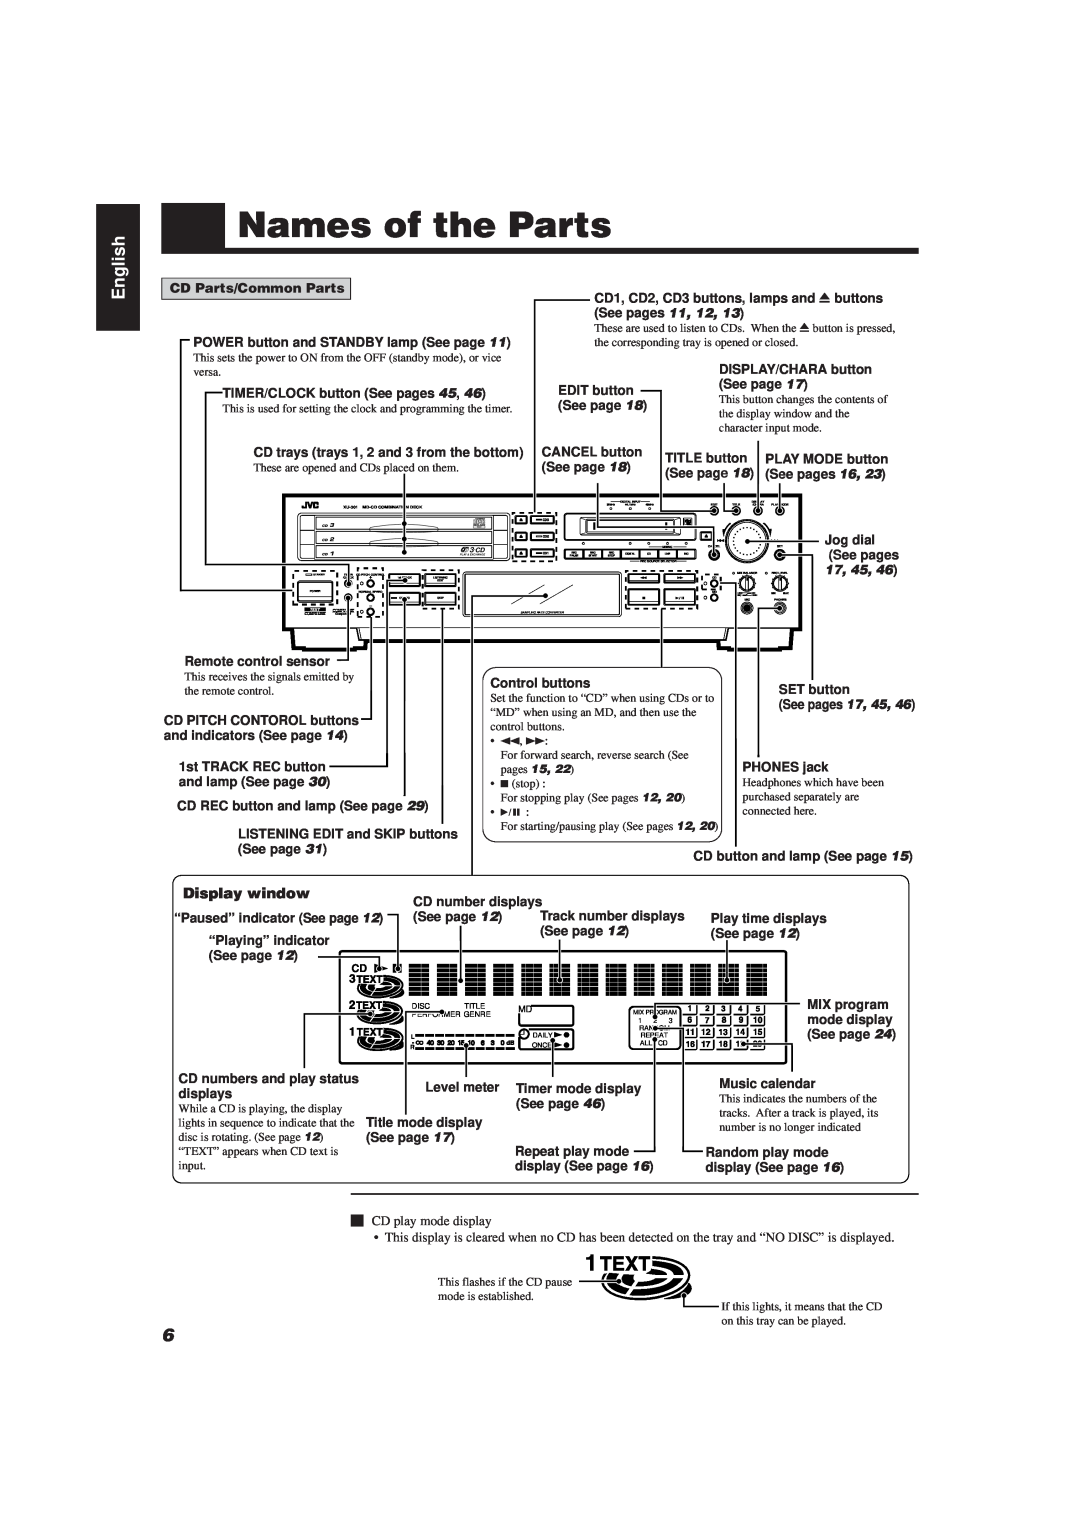 JVC XU-301 manual Names of the Parts, English, Display window 